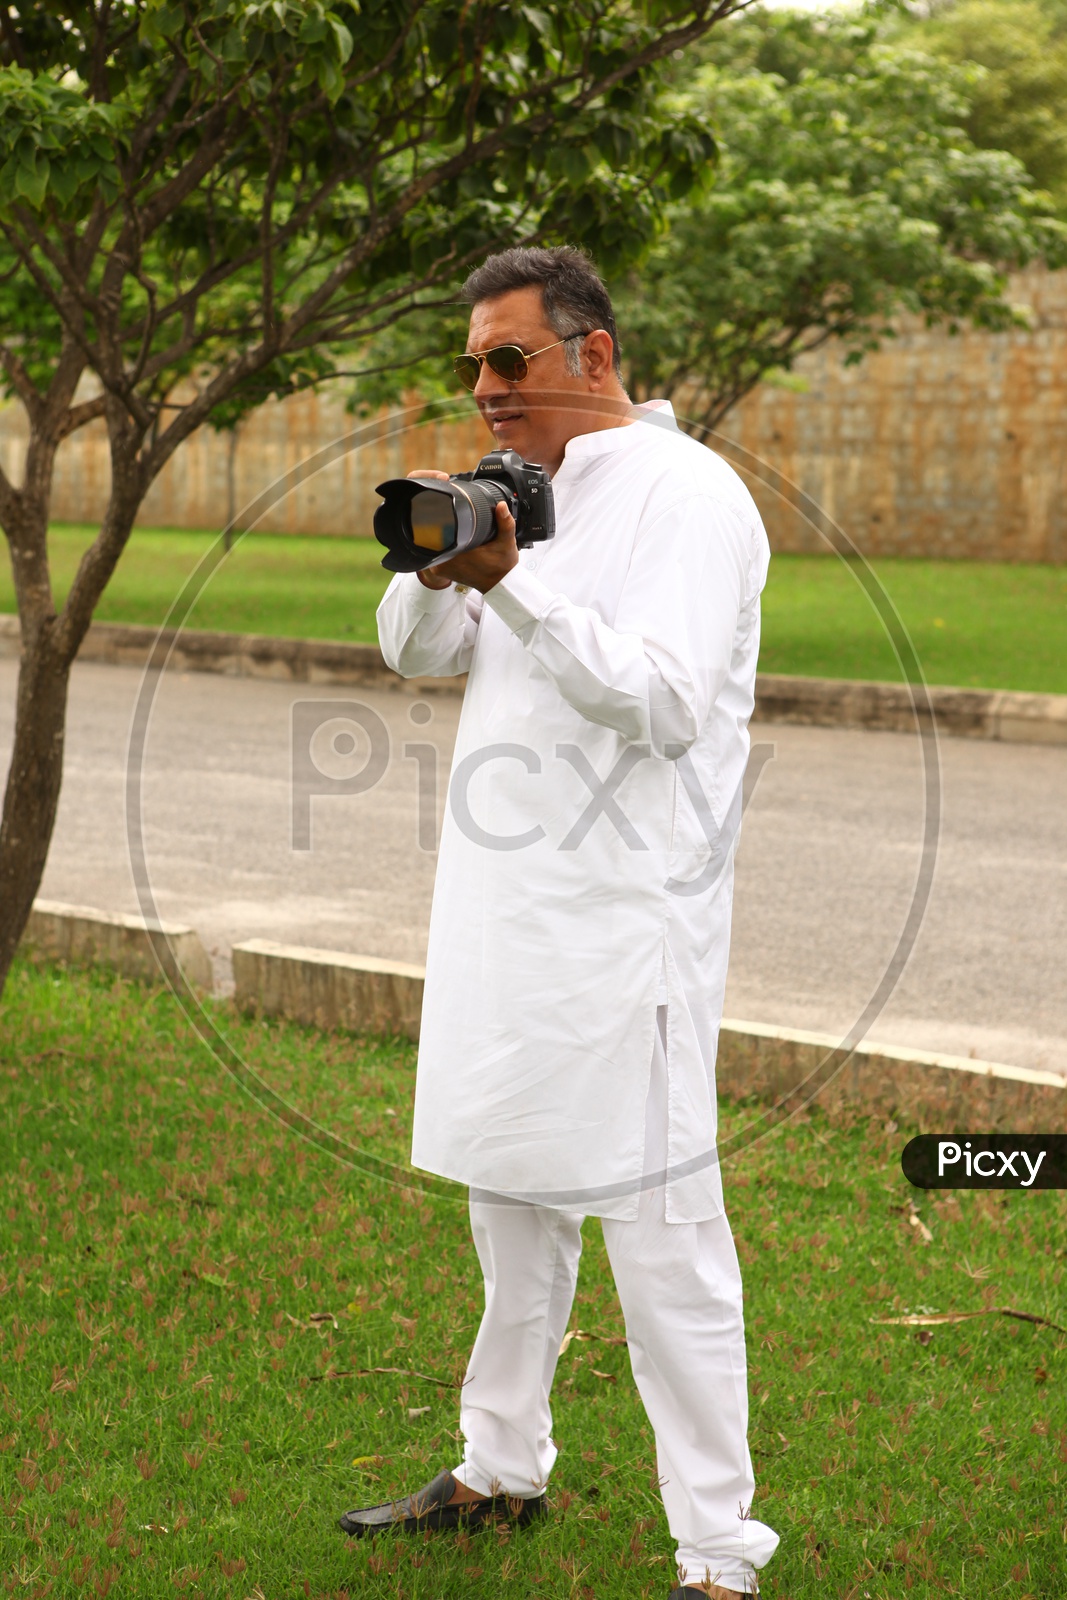 Actor Boman Irani with DSLR Camera